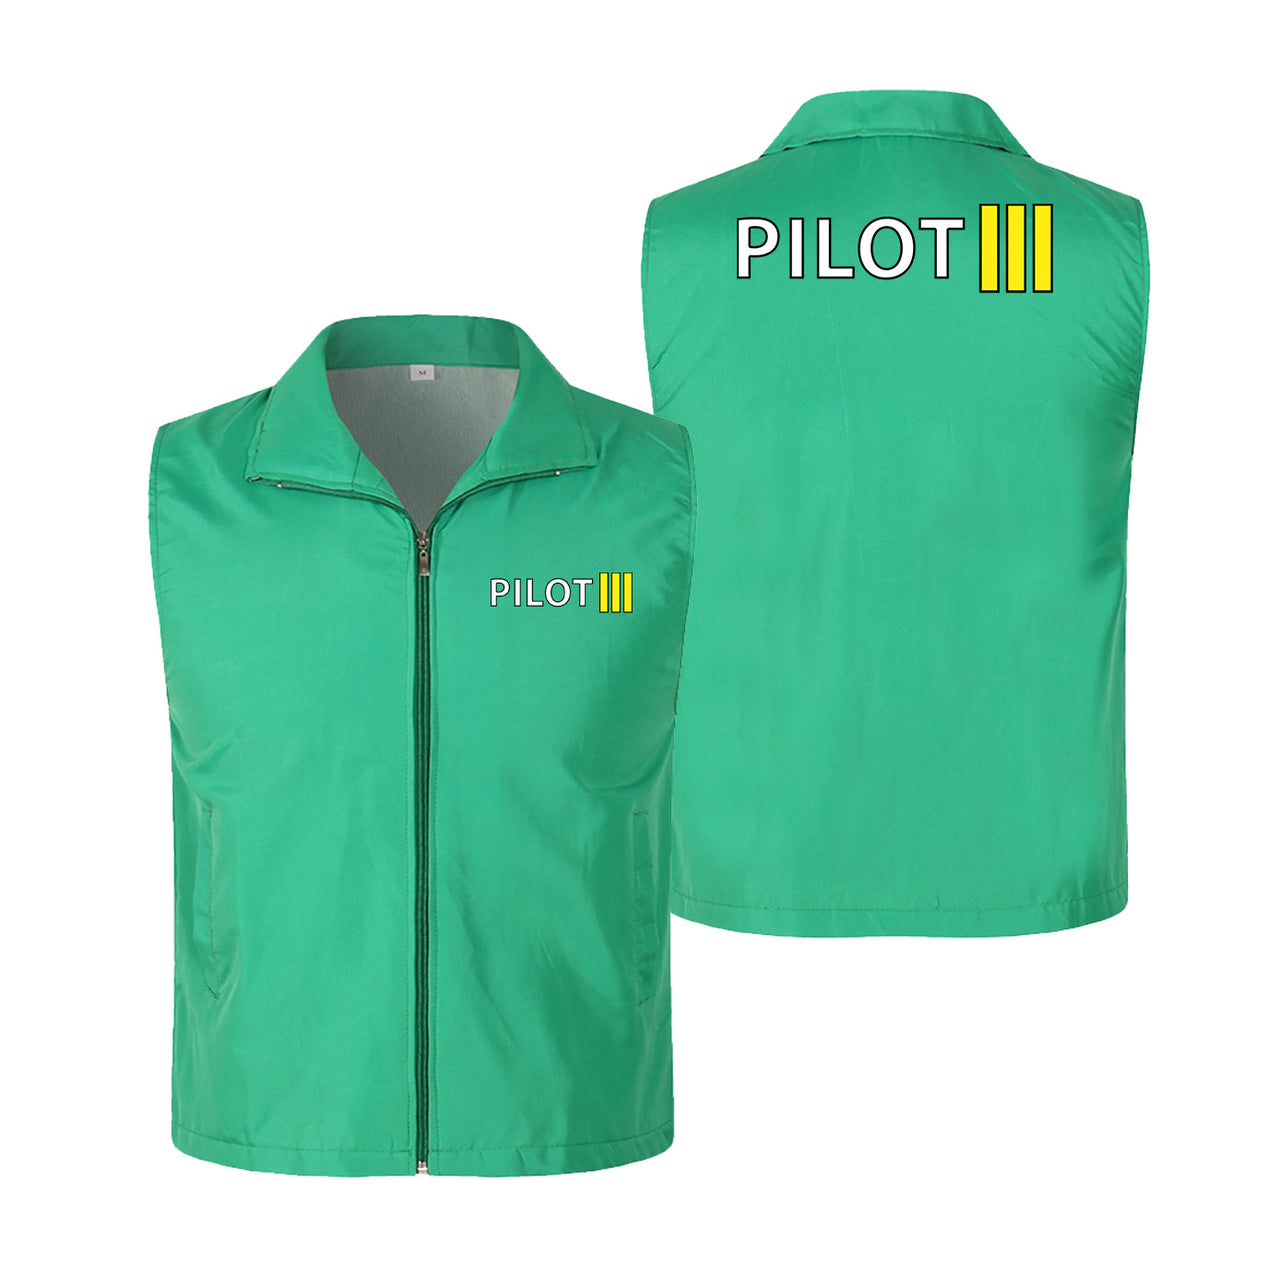 Pilot & Stripes (3 Lines) Designed Thin Style Vests